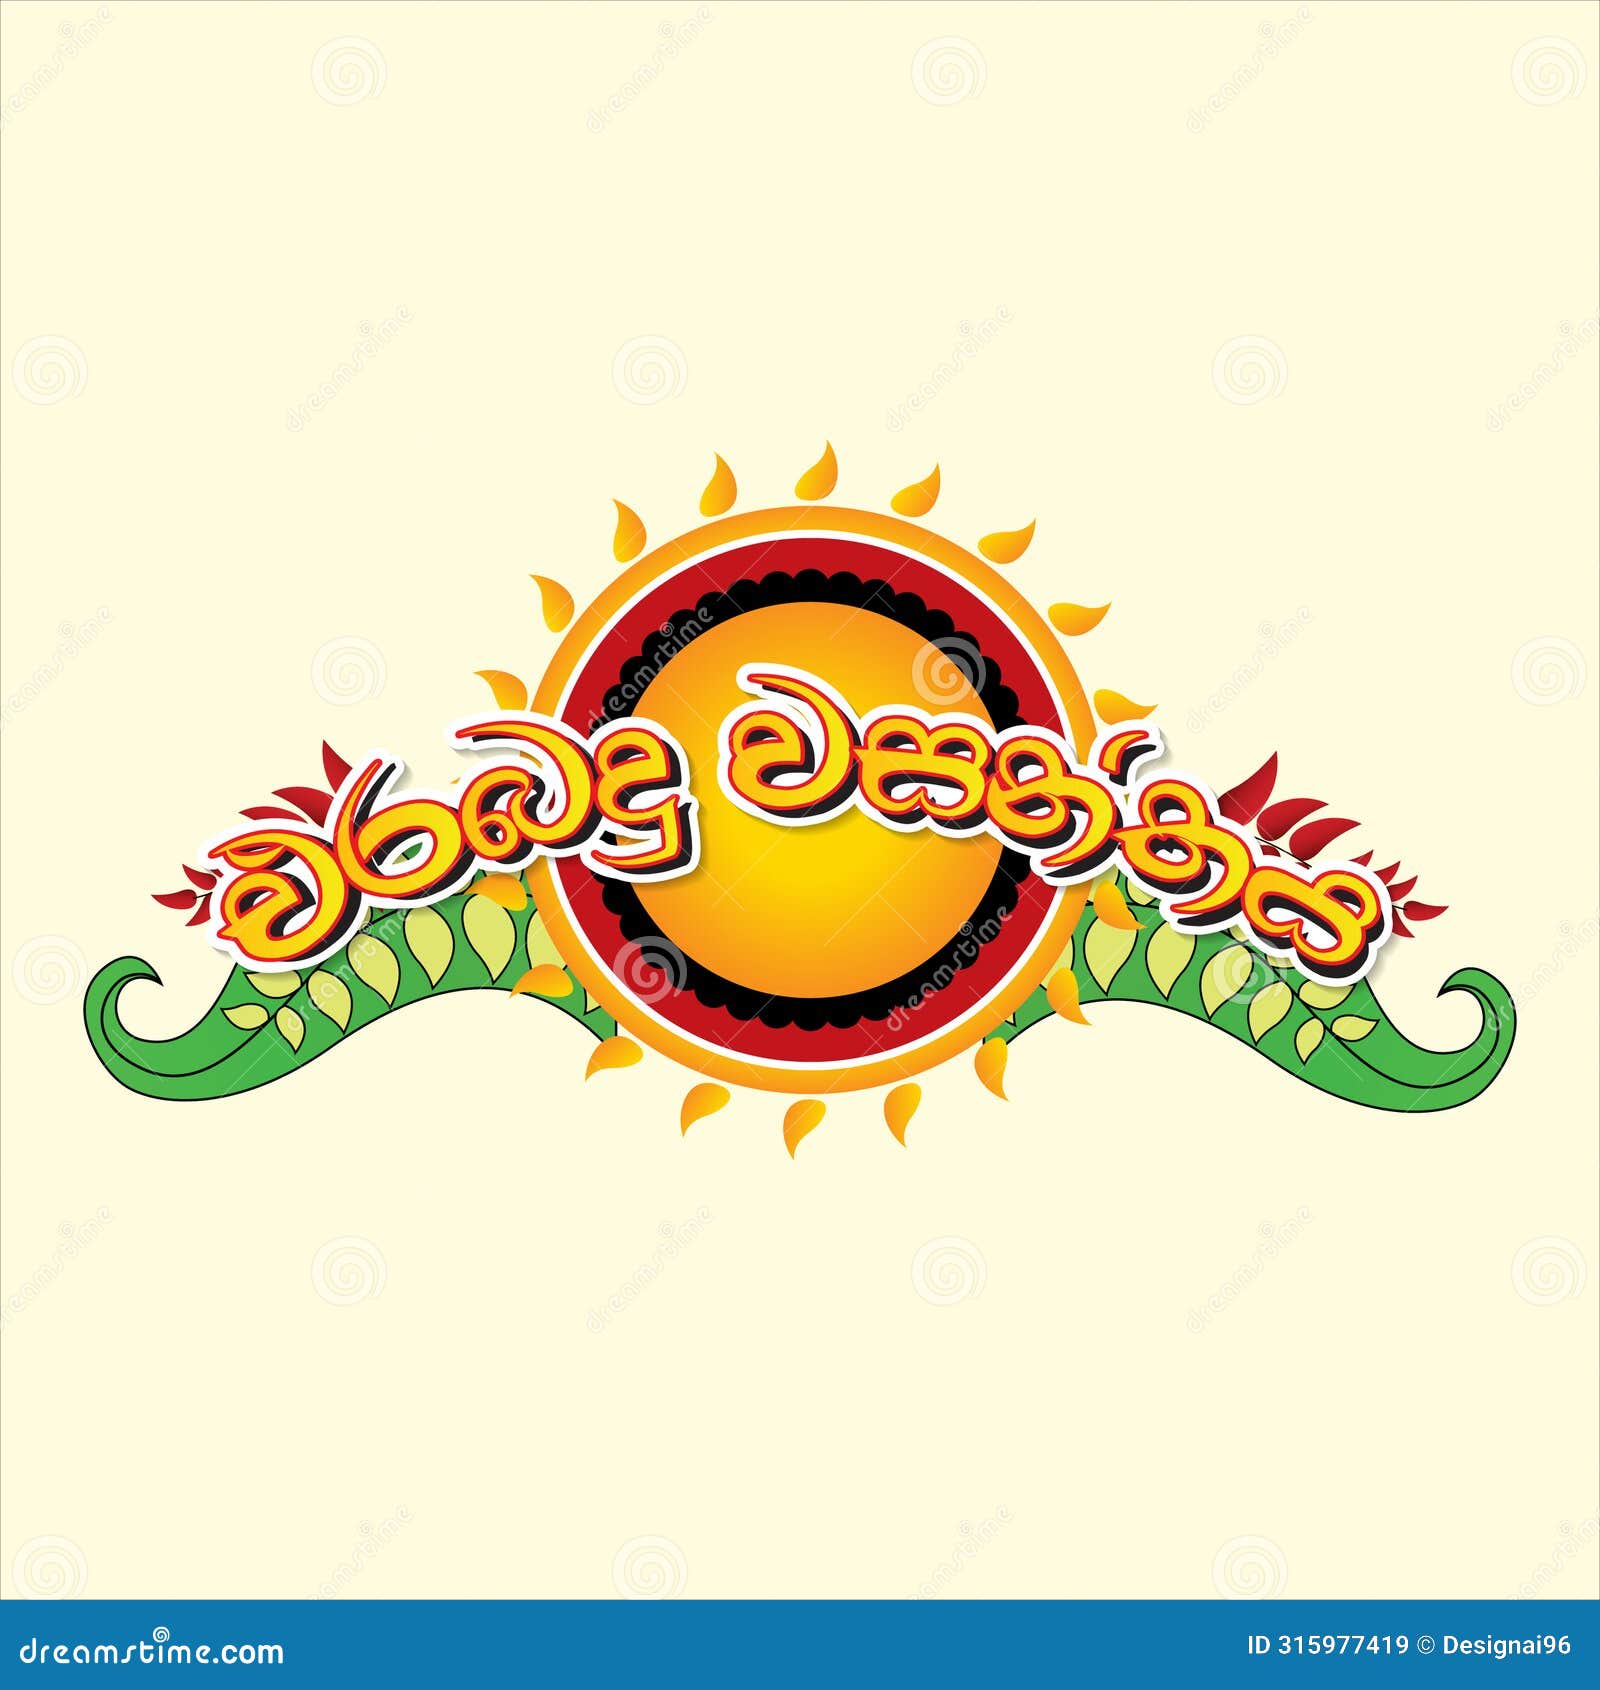 sinhala and tamil new year logo.